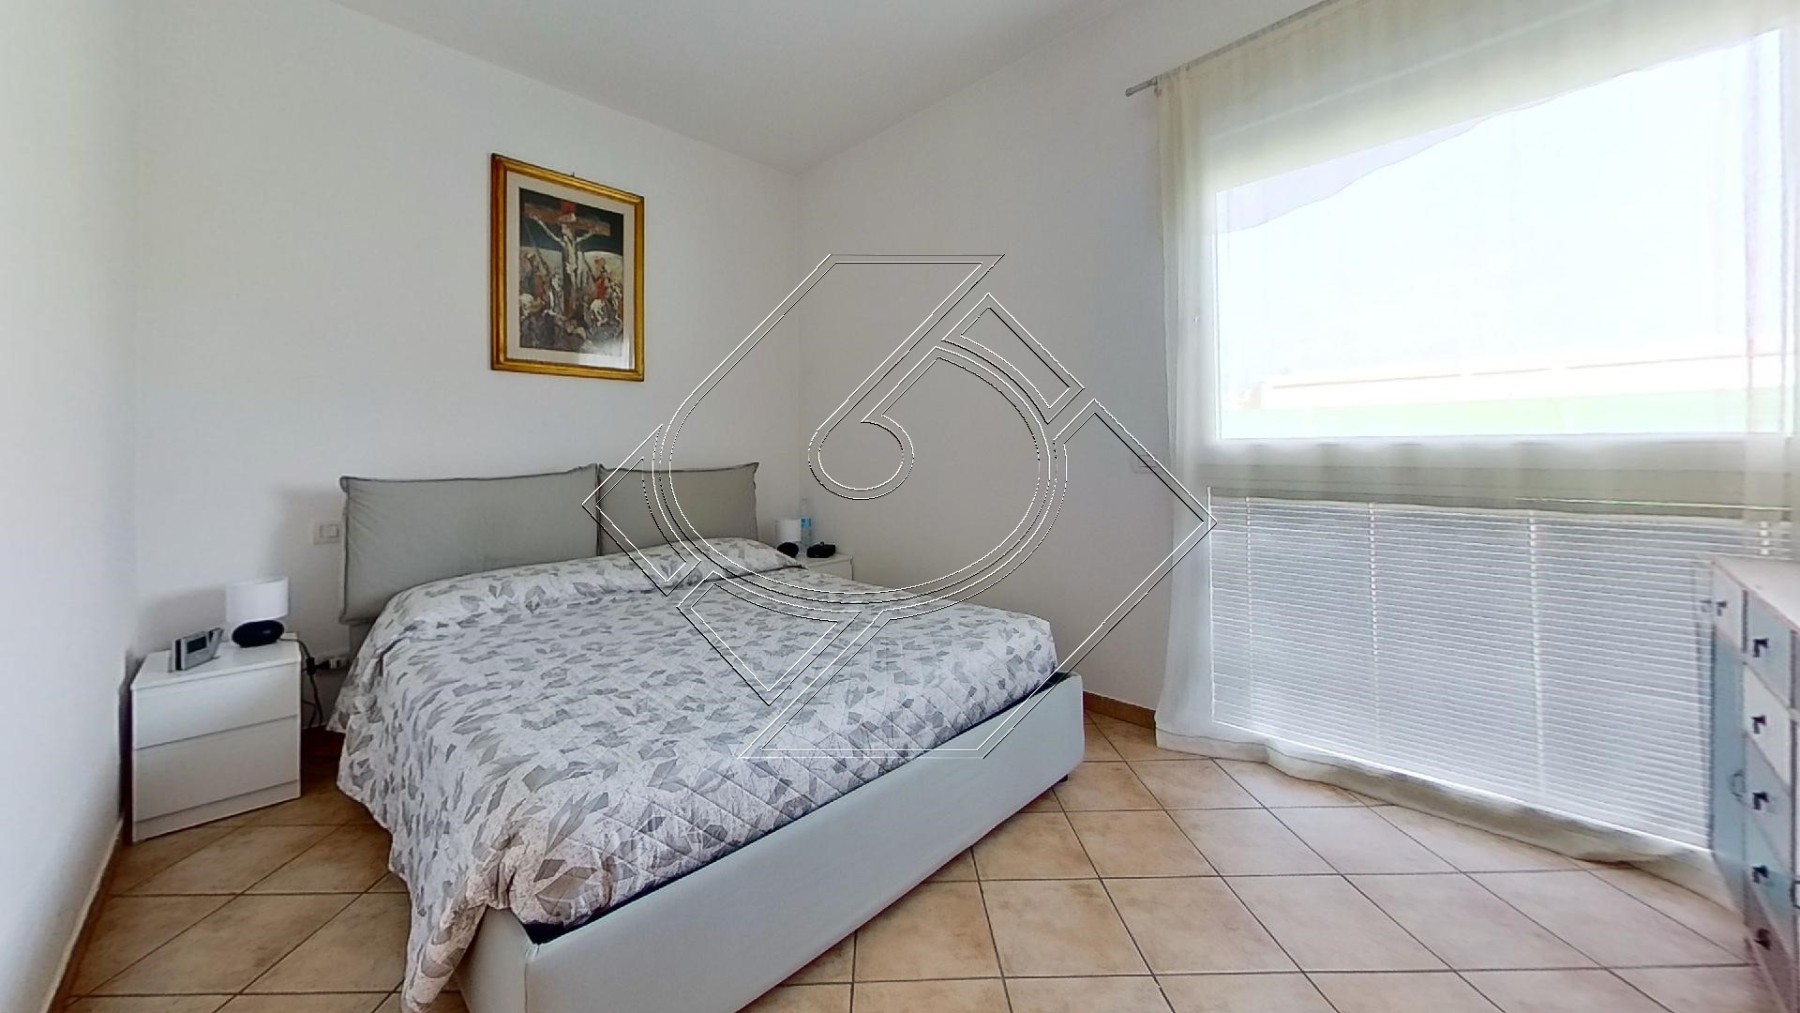 7A-Via-dellArcovata-Bedroom